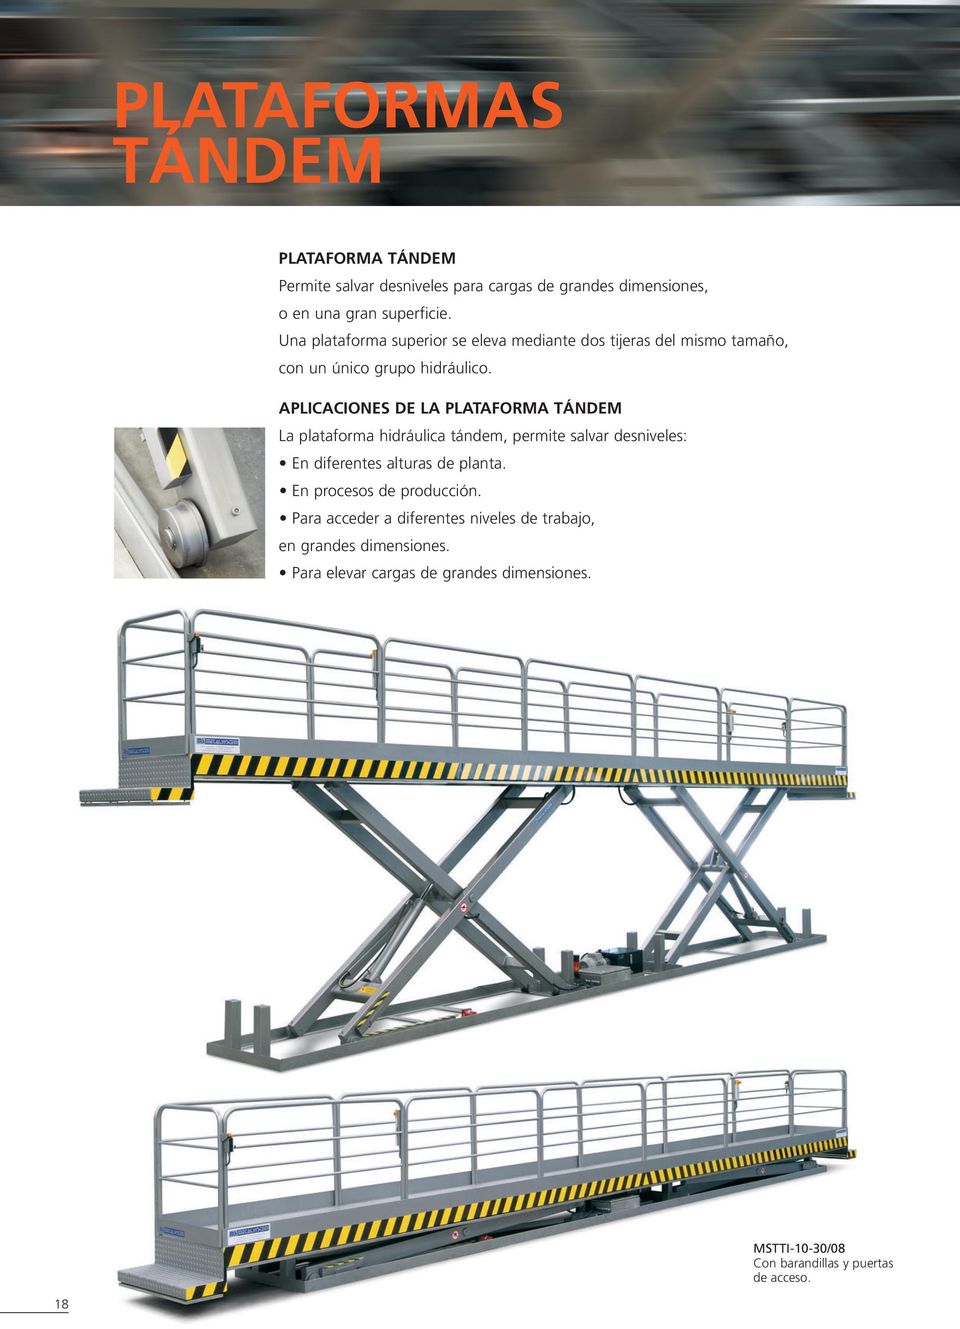 APLICACIONES DE LA PLATAFORMA TÁNDEM La plataforma hidráulica tándem, permite salvar desniveles: En diferentes alturas de planta.